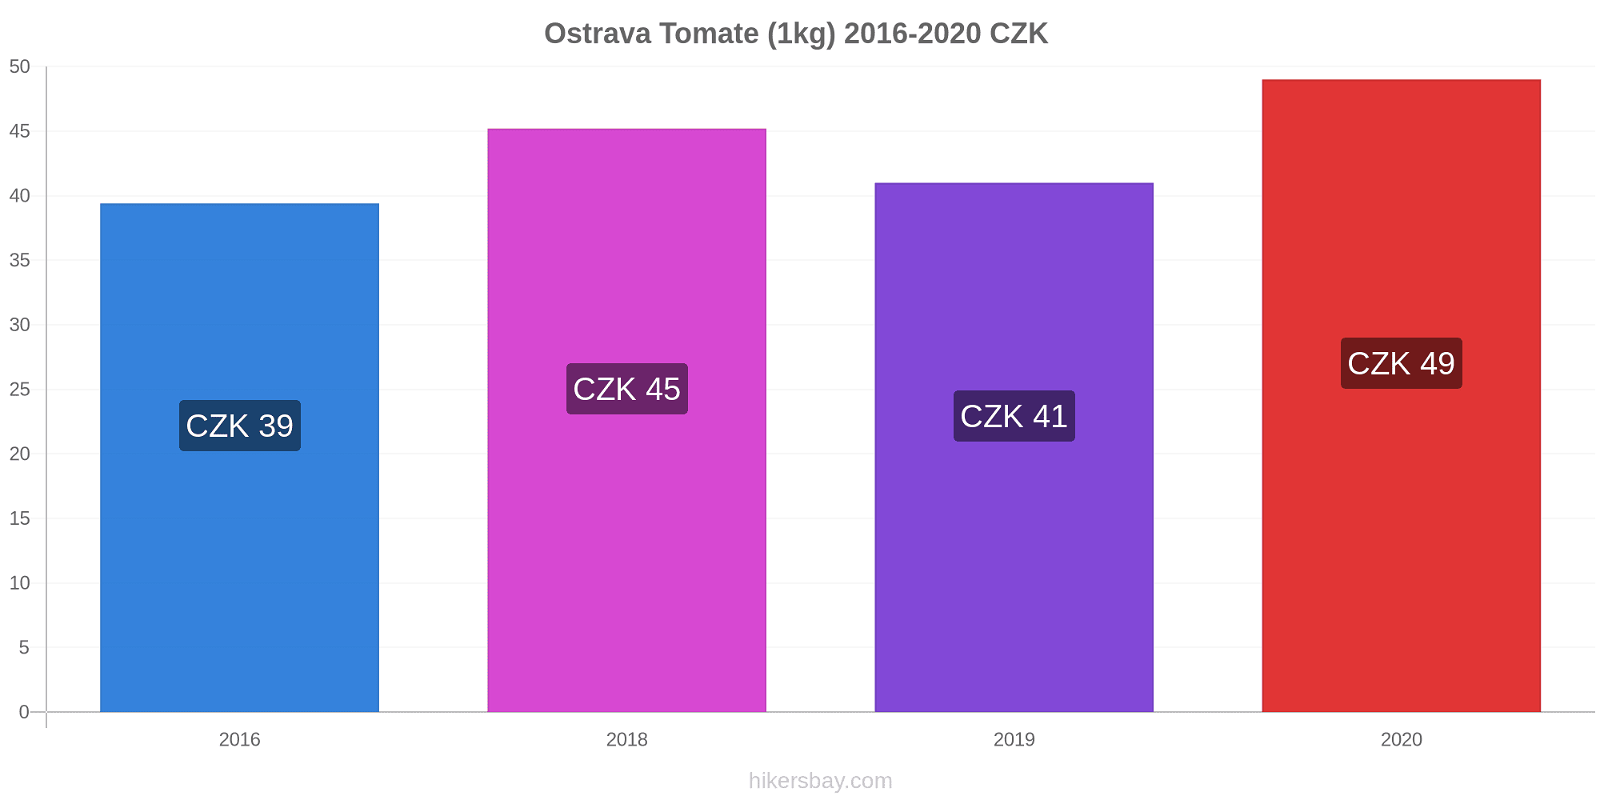 Ostrava cambios de precios Tomate (1kg) hikersbay.com